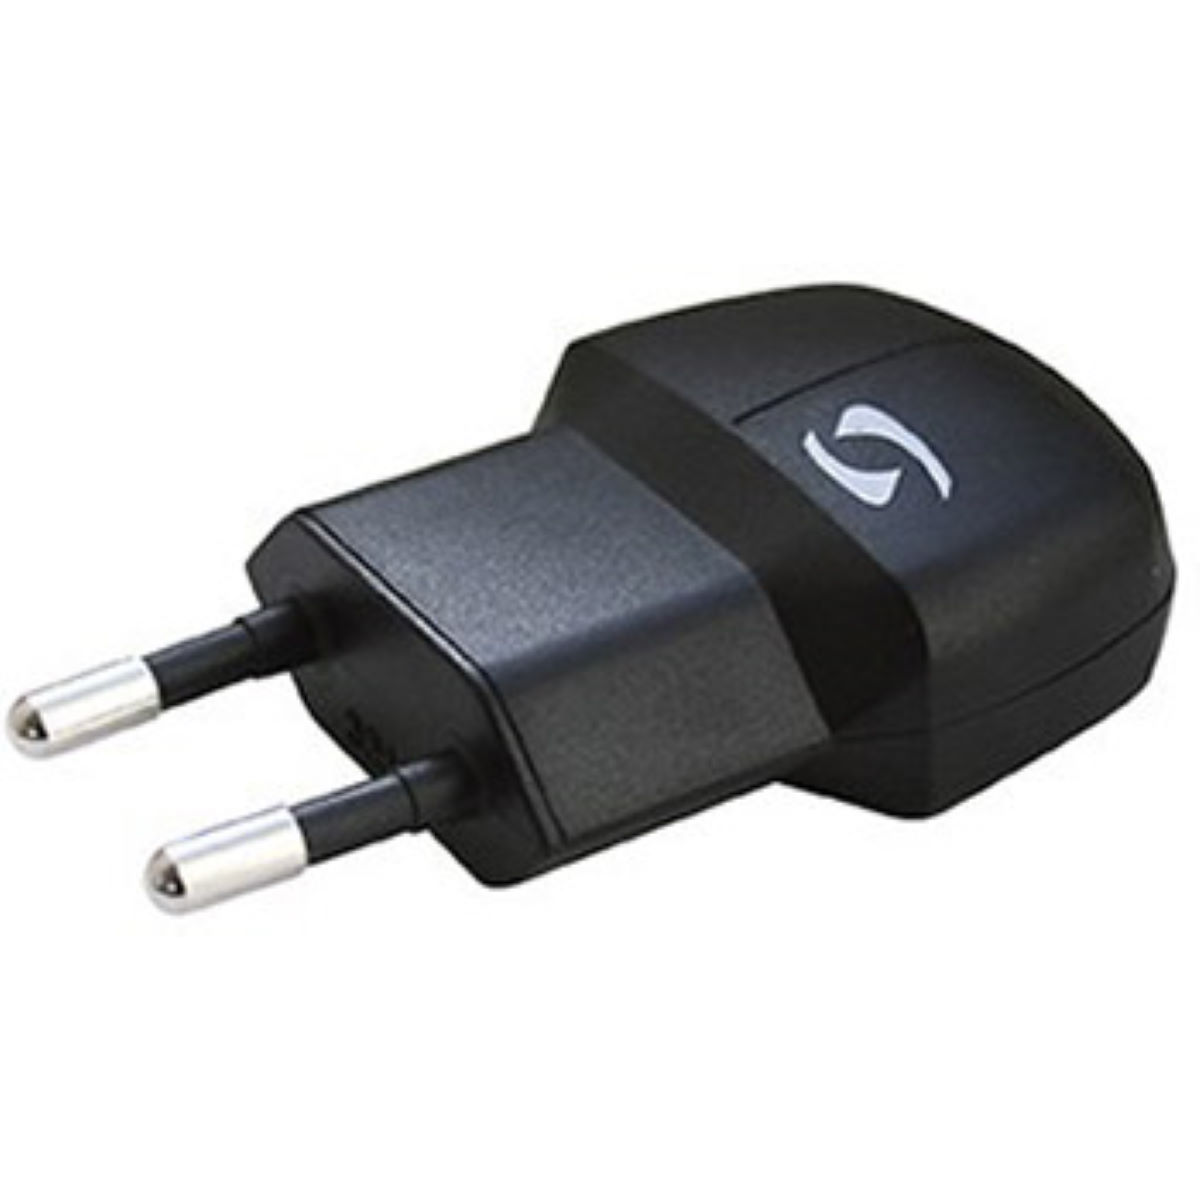 Sigma ROX 11.0 Micro USB Charging Cable - Cargadores